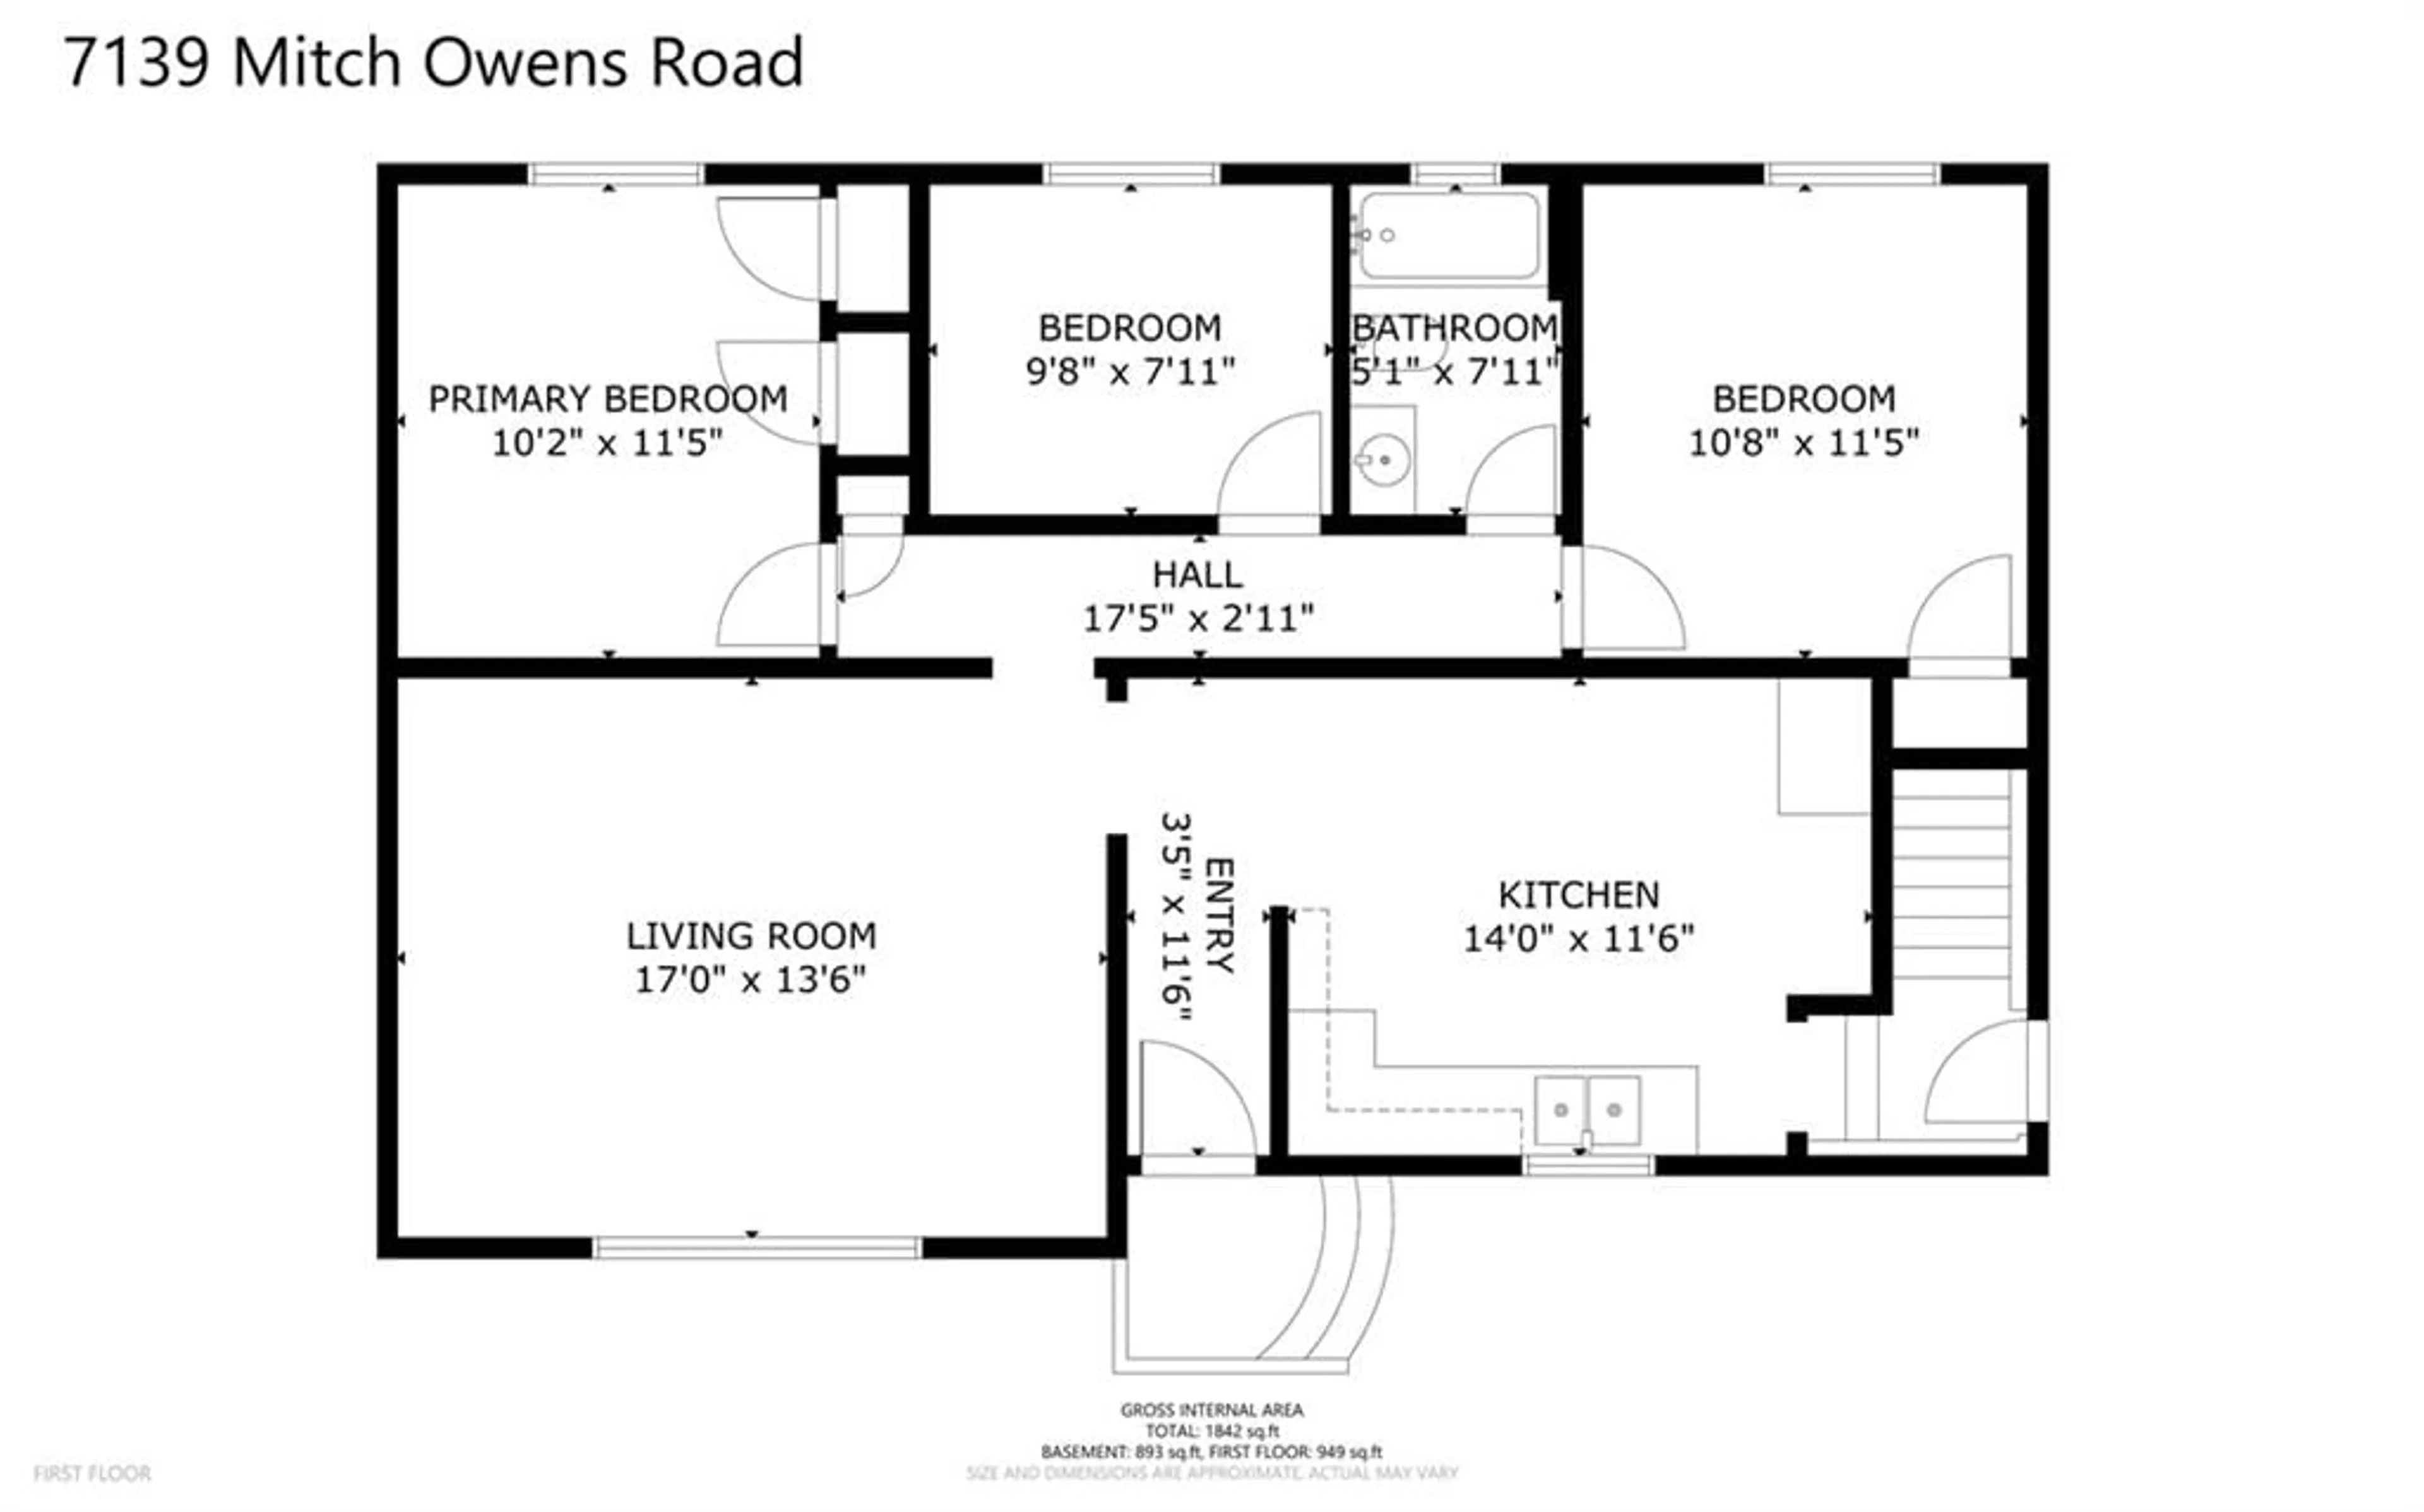 Floor plan for 7139 MITCH OWENS Rd, Ottawa Ontario K1G 3N4